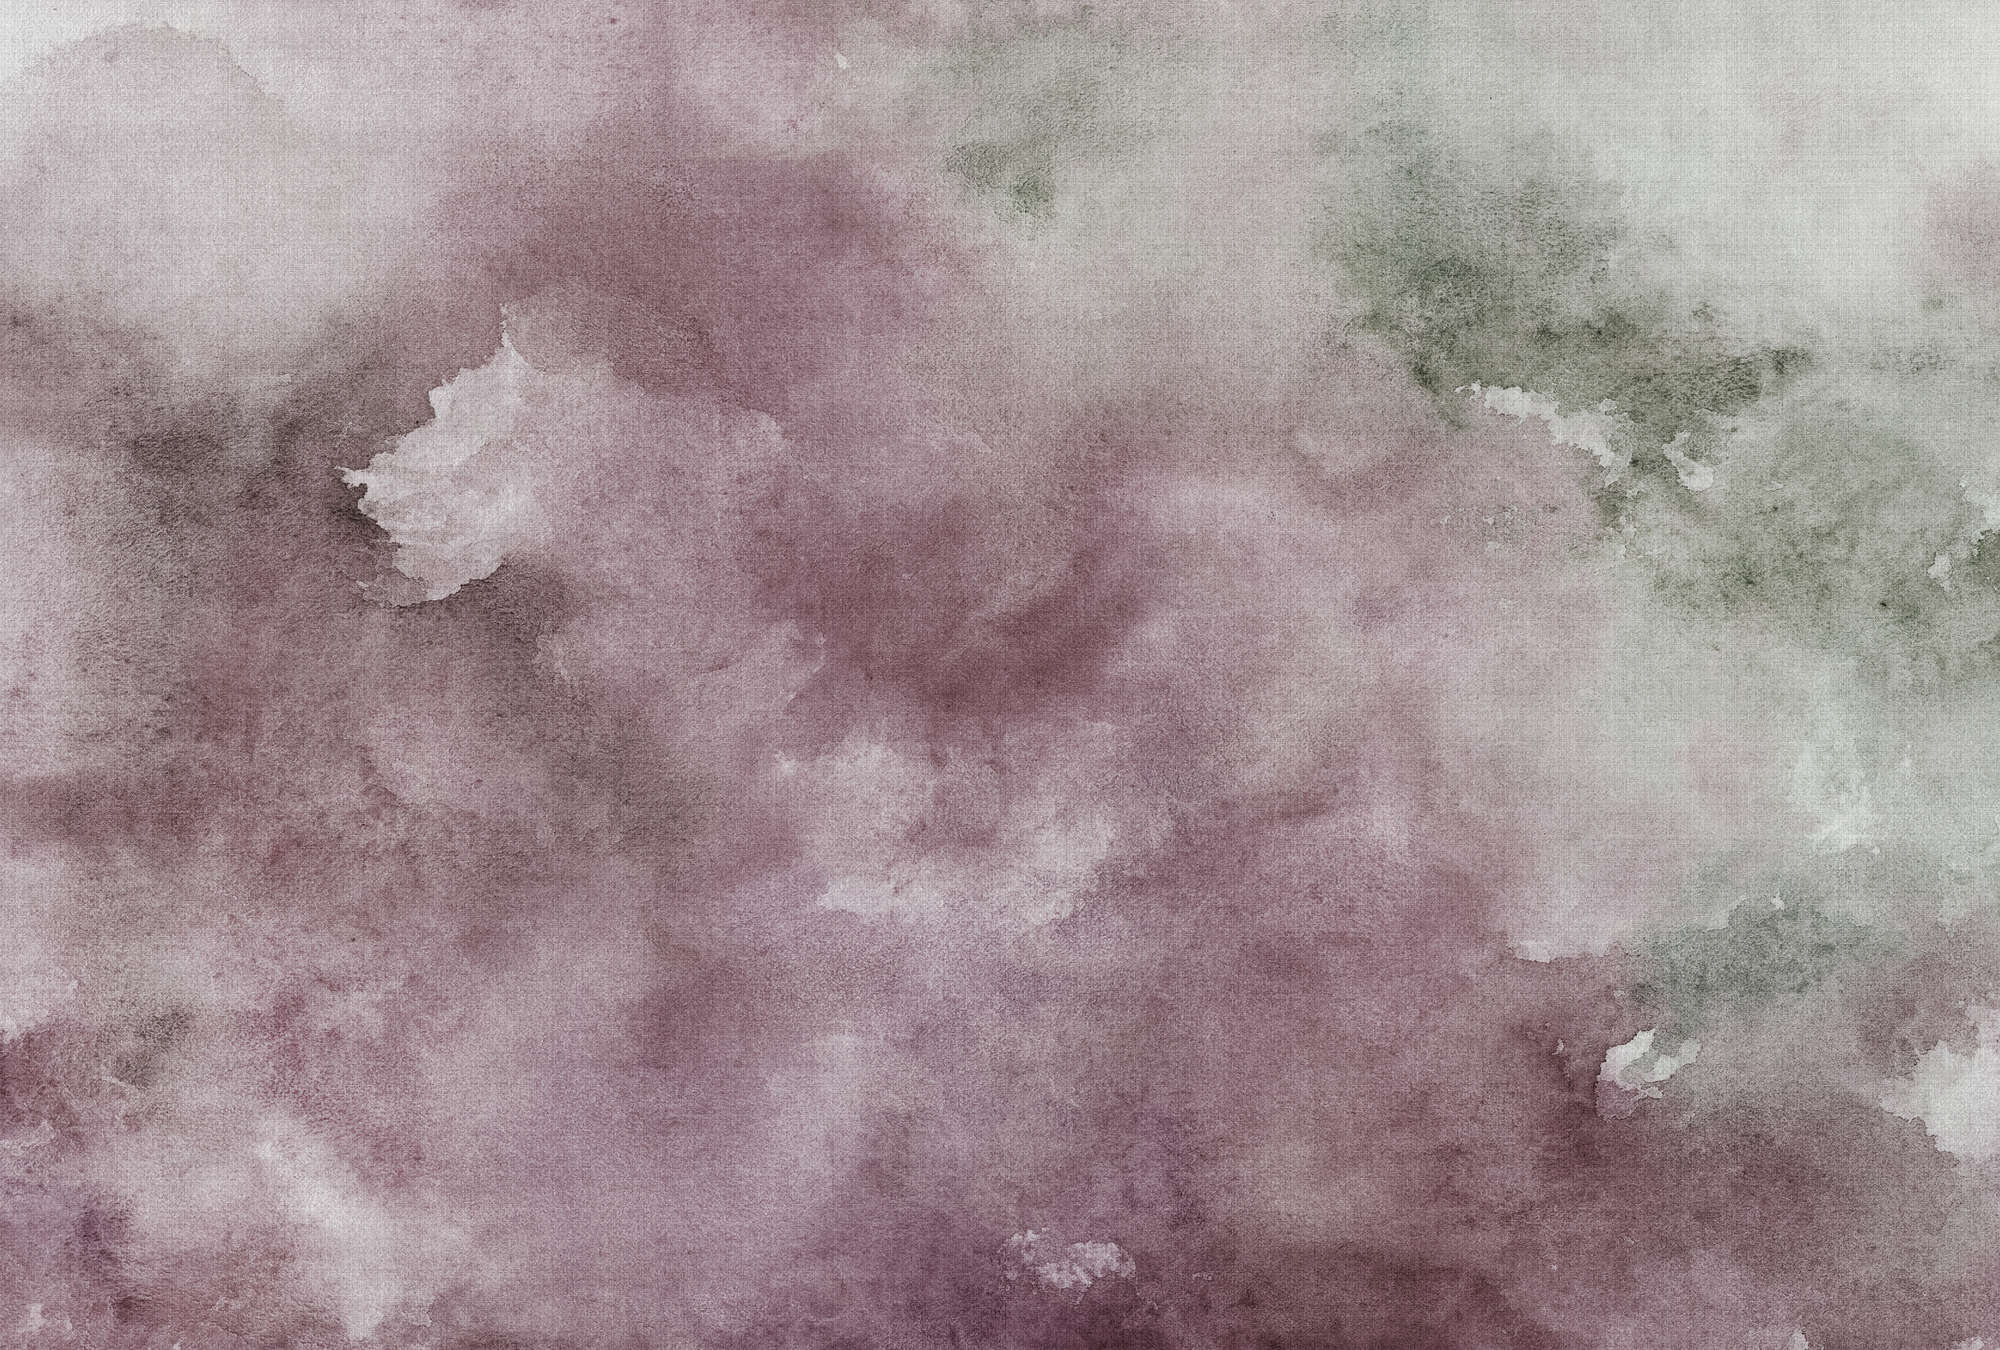             Watercolours 2 - Wallpaper Watercolours Motif Violet- Nature Linen Texture - Beige, Brown | Pearl Smooth Non-woven
        